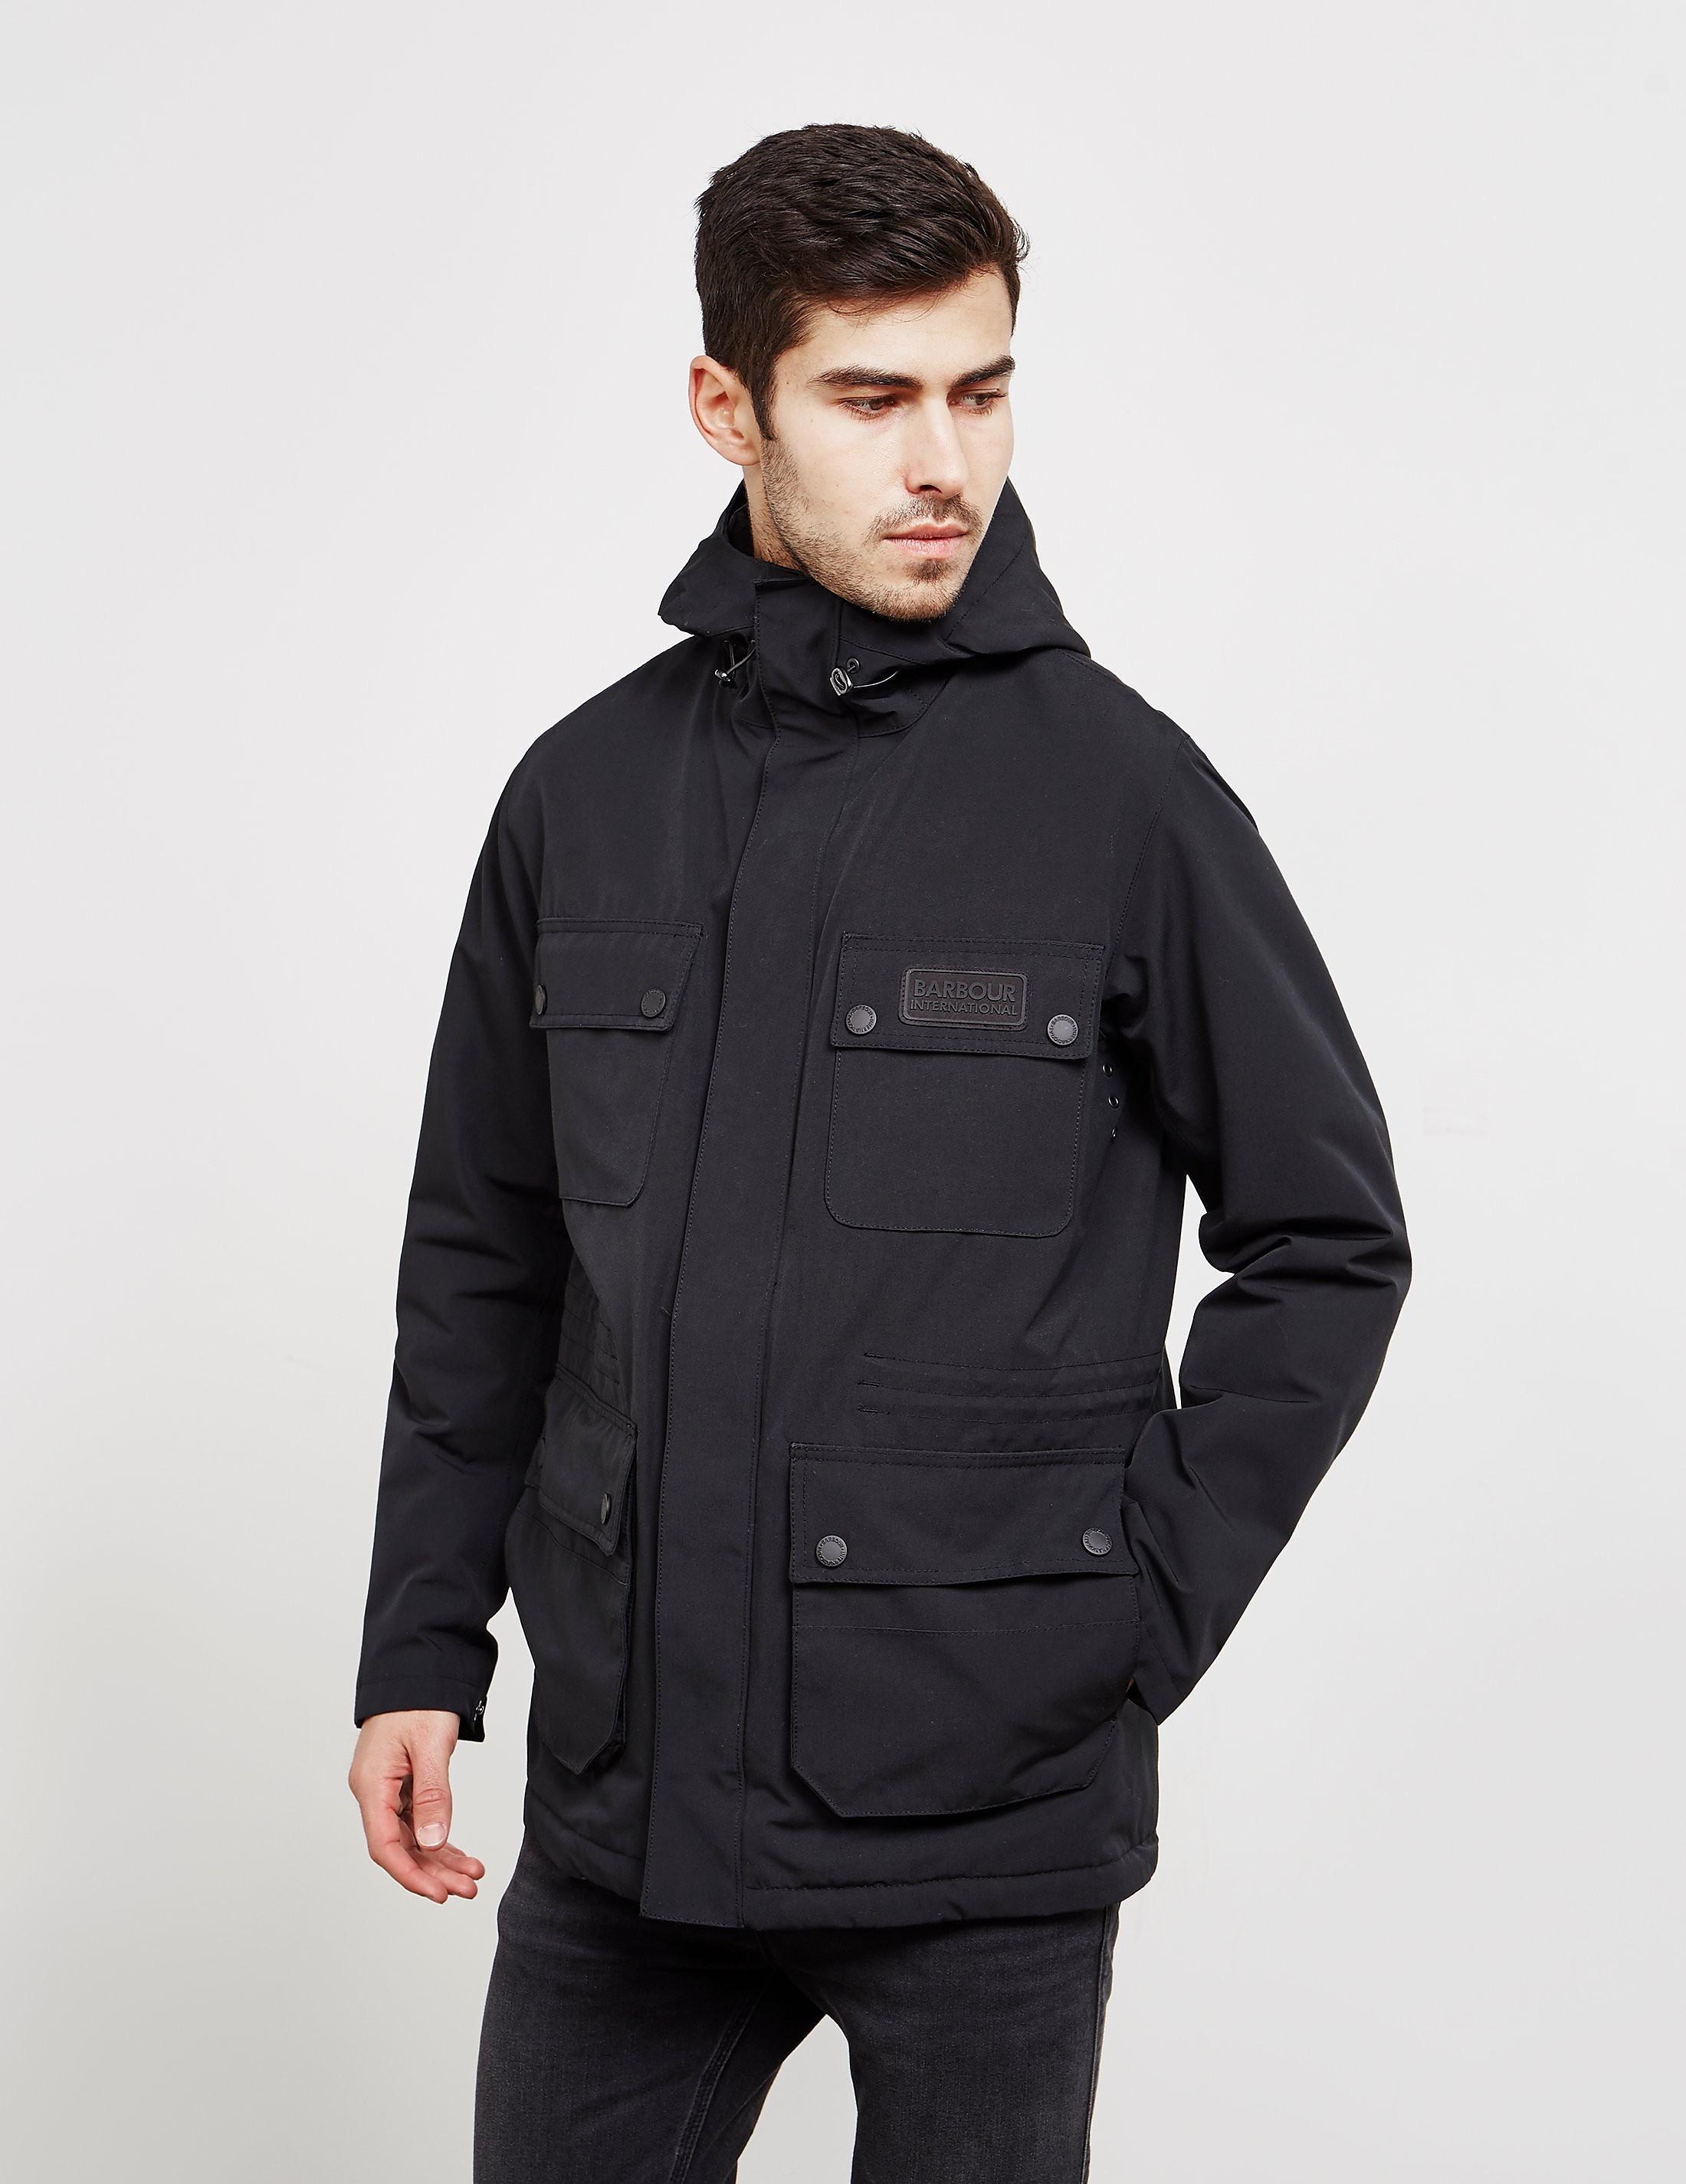 Barbour Cotton Endo Waterproof Jacket in Black for Men - Lyst